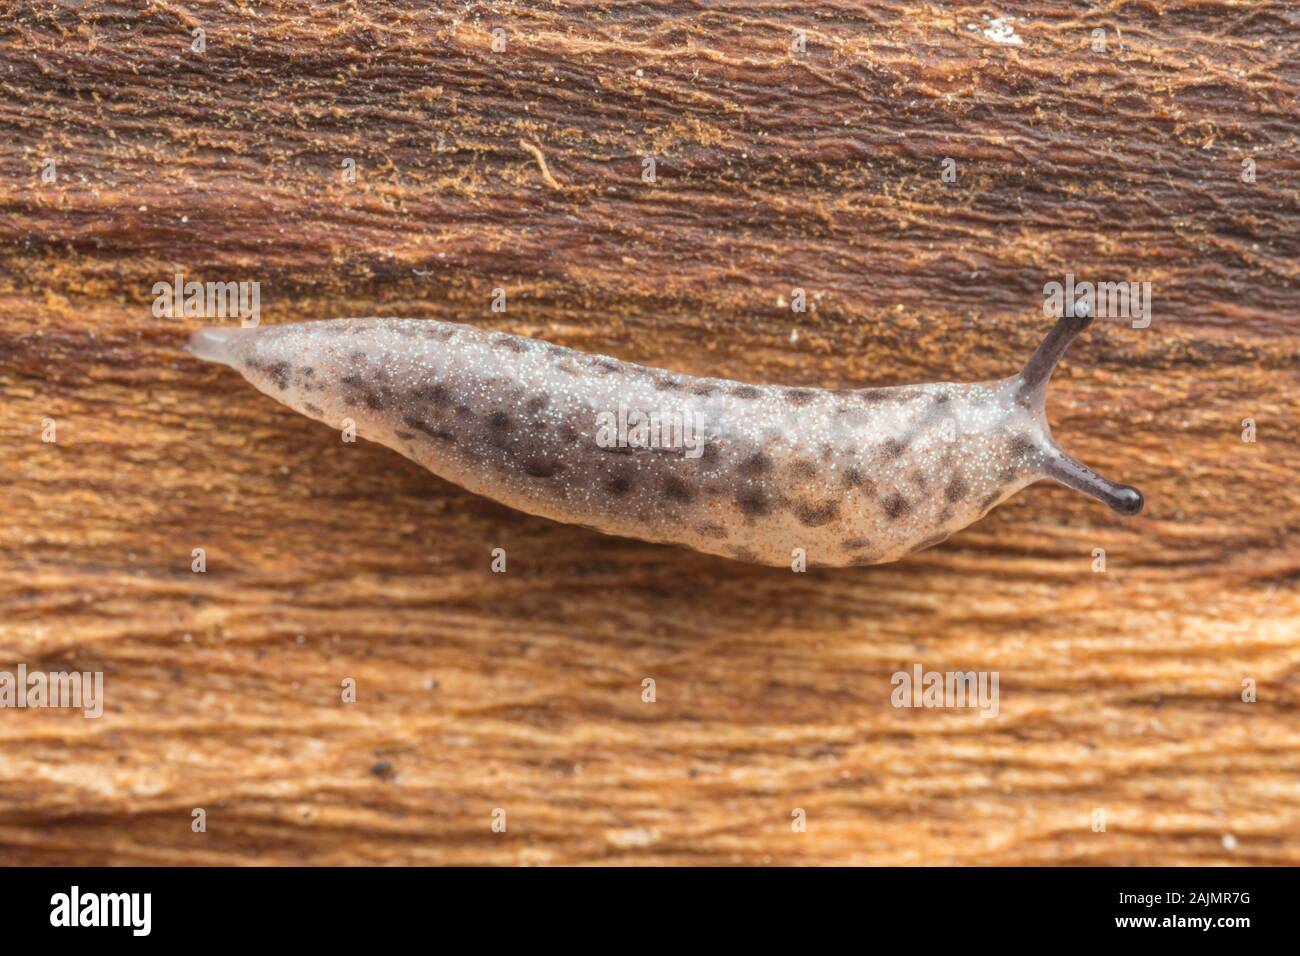 A juvenile Changeable Mantleslug (Megapallifera mutabilis) Stockfoto